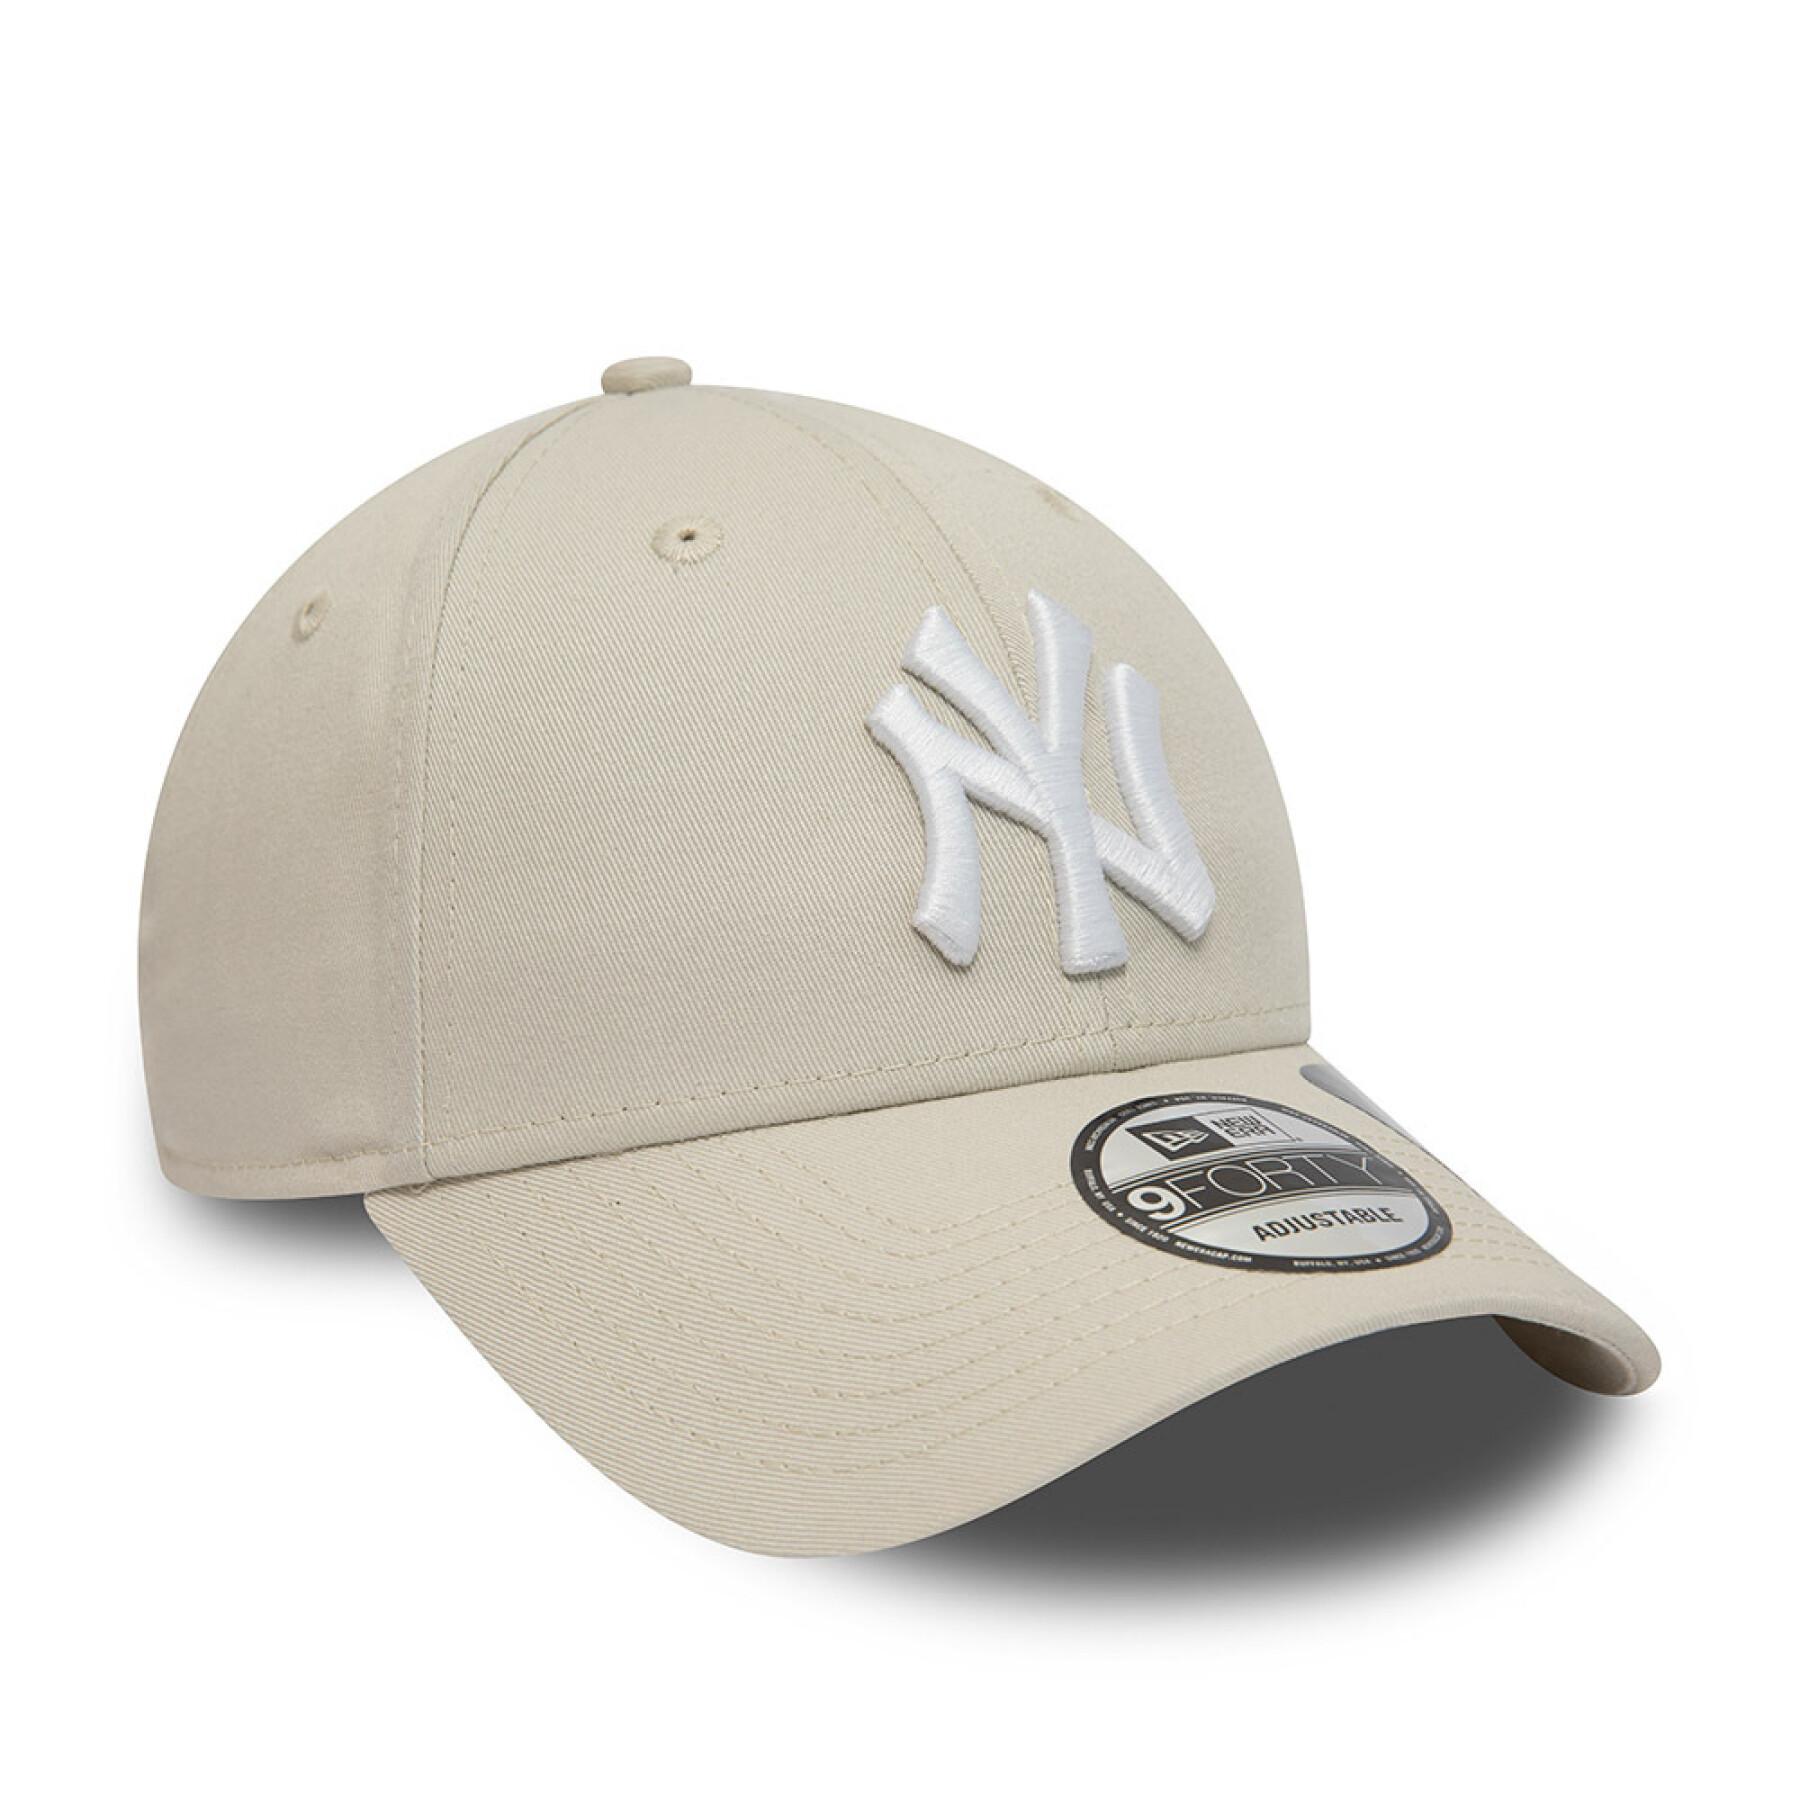 Czapka New York Yankees Repreve League Essential